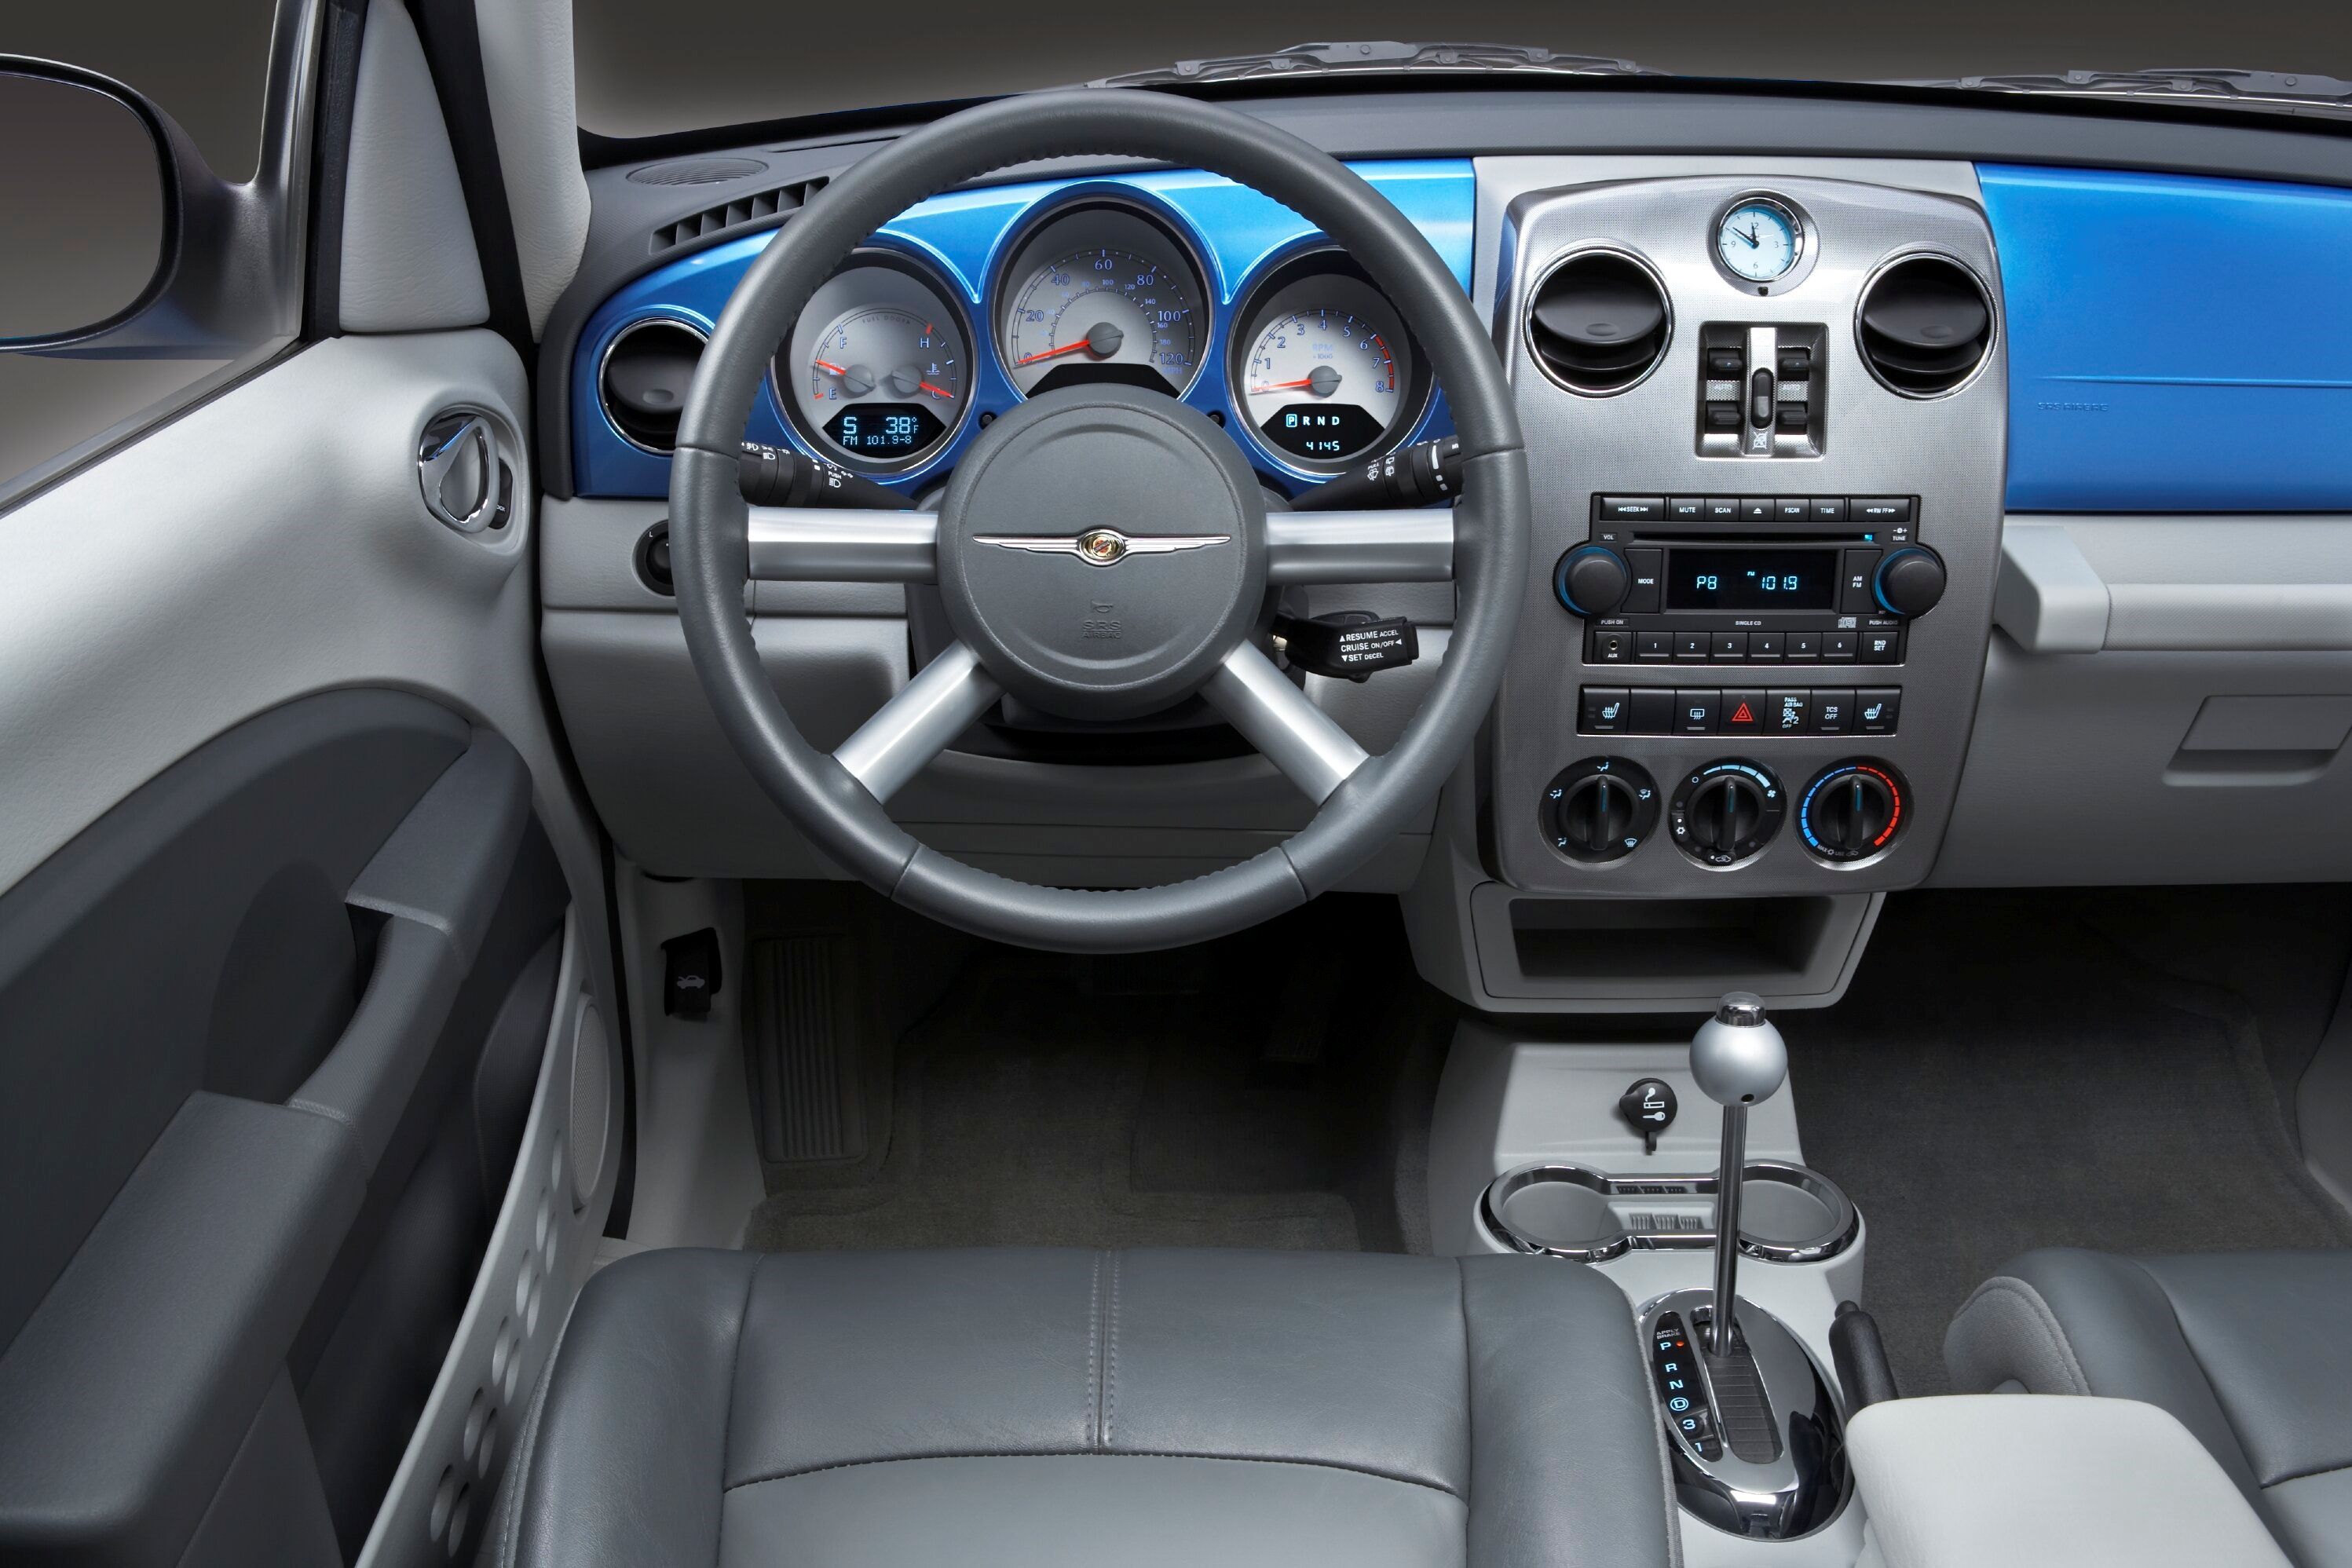 2009 Chrysler PT Cruiser - Review | CarBuzz